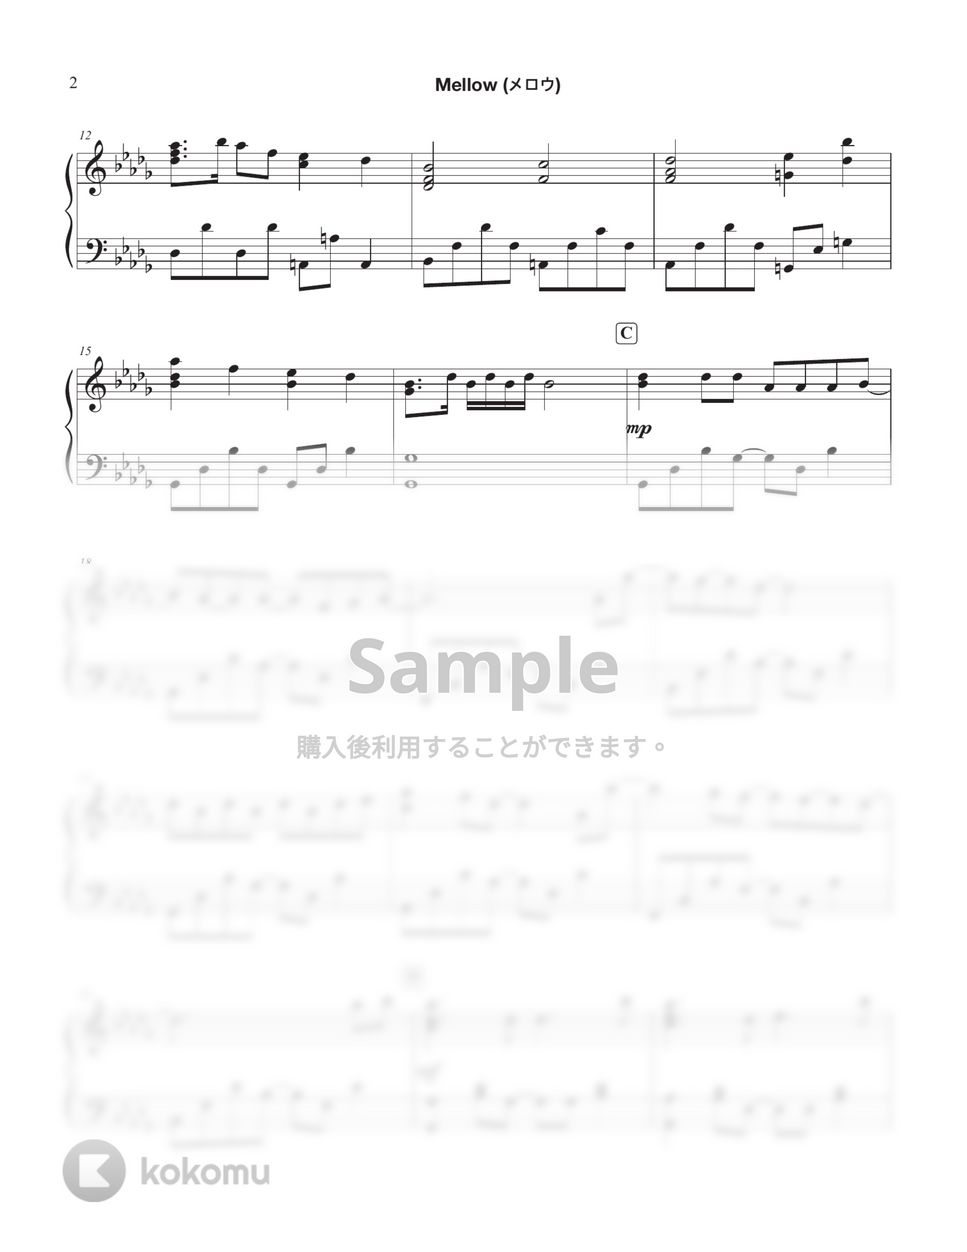 Keina Suda - Mellow (メロウ) (組成変更付き) by Tully Piano